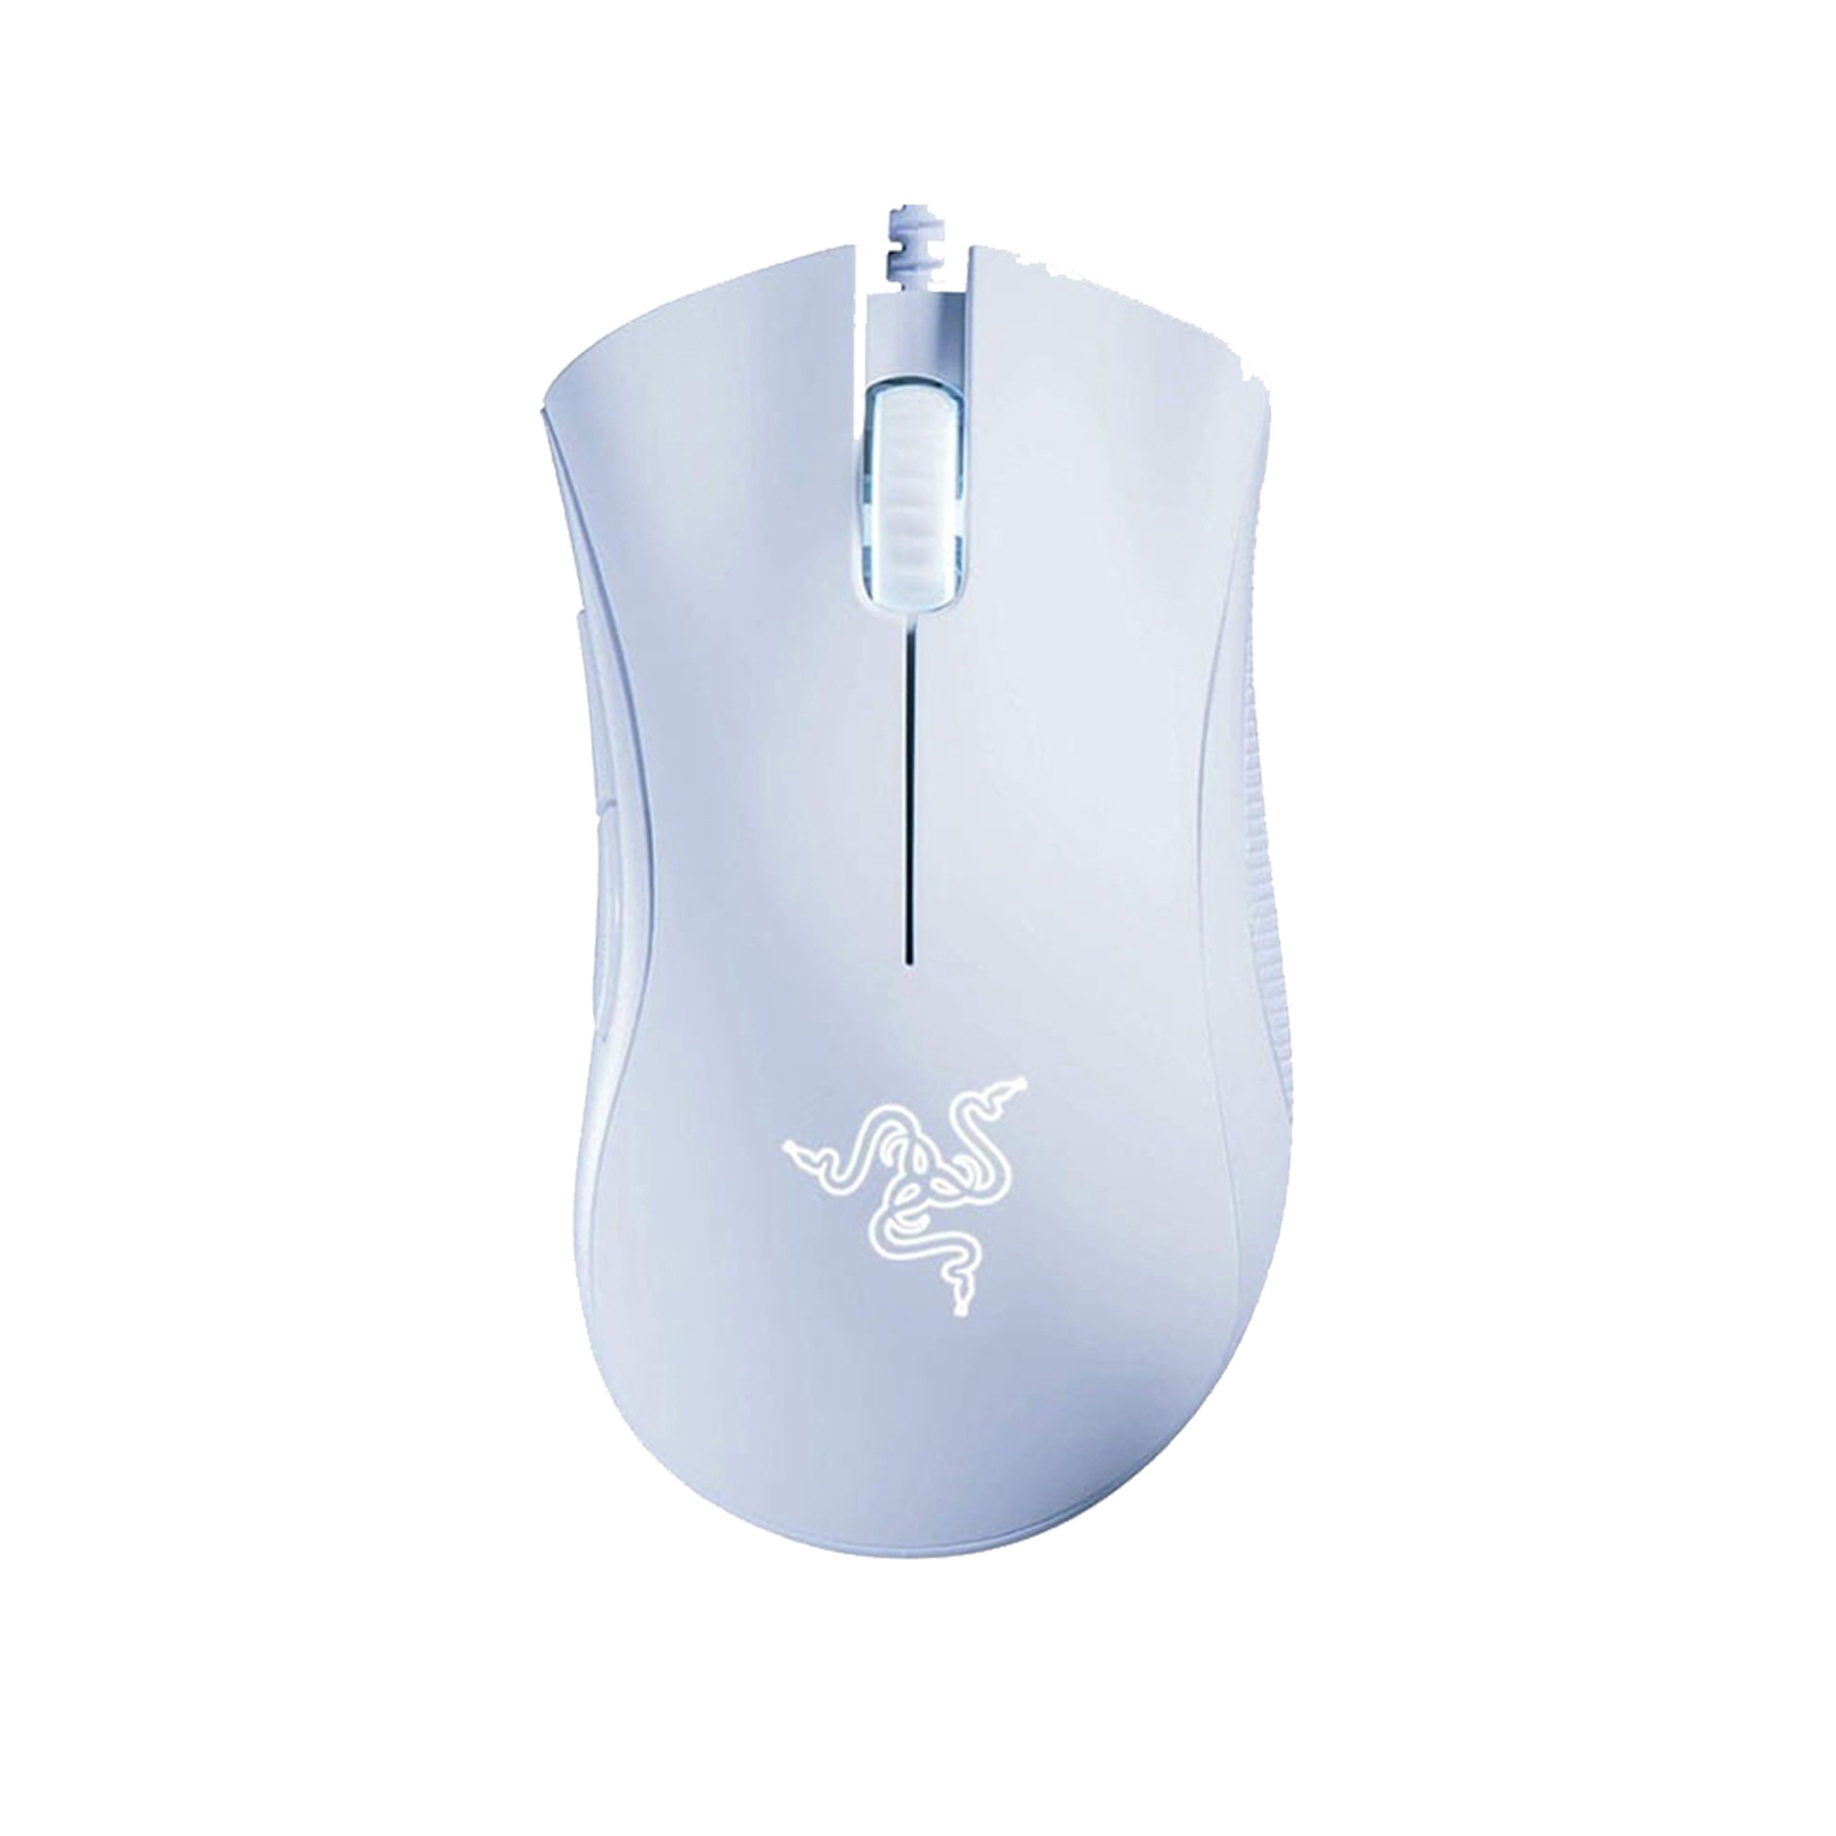 Razer Deathadder Essential Gaming Mouse White 1 - ماوس ریزر Deathadder Essential گیمینگ سفید دخترانه